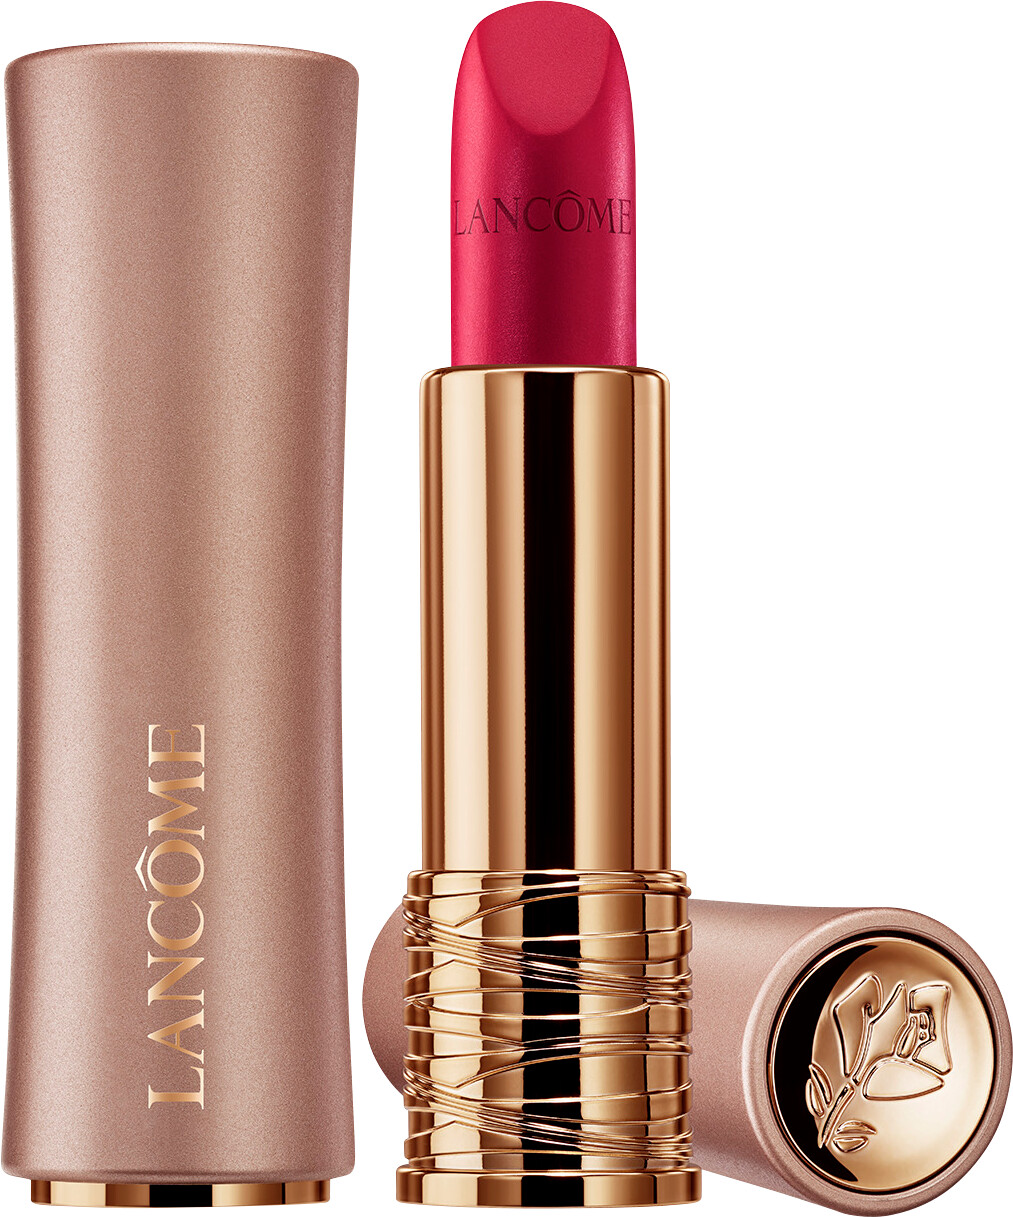 Lancome L'Absolu Rouge Intimatte Soft Matte Lipstick 3.4g 525 - French Bisou